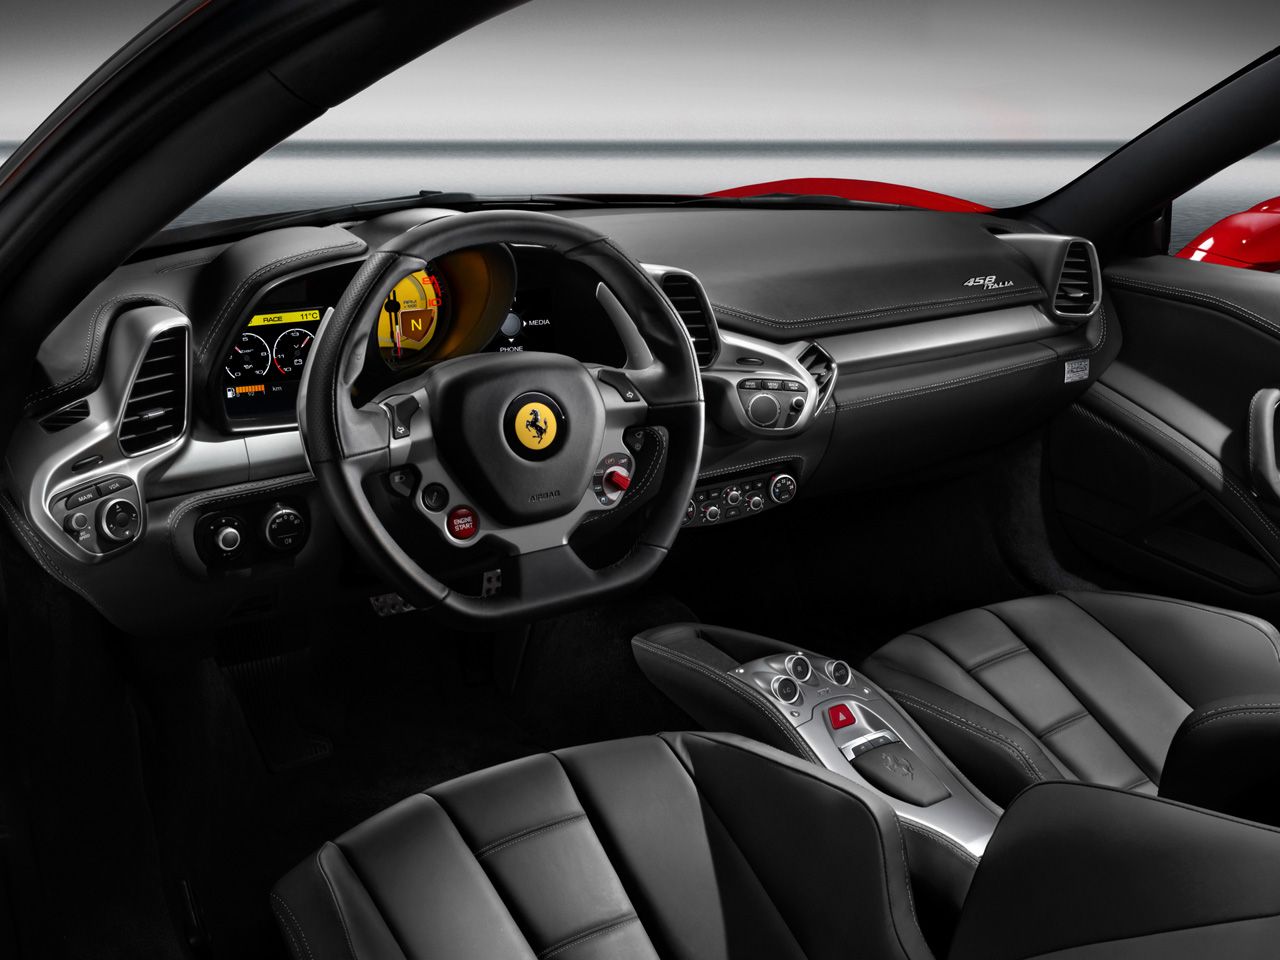 automotivegeneral: ferrari 458 italia interior wallpaper